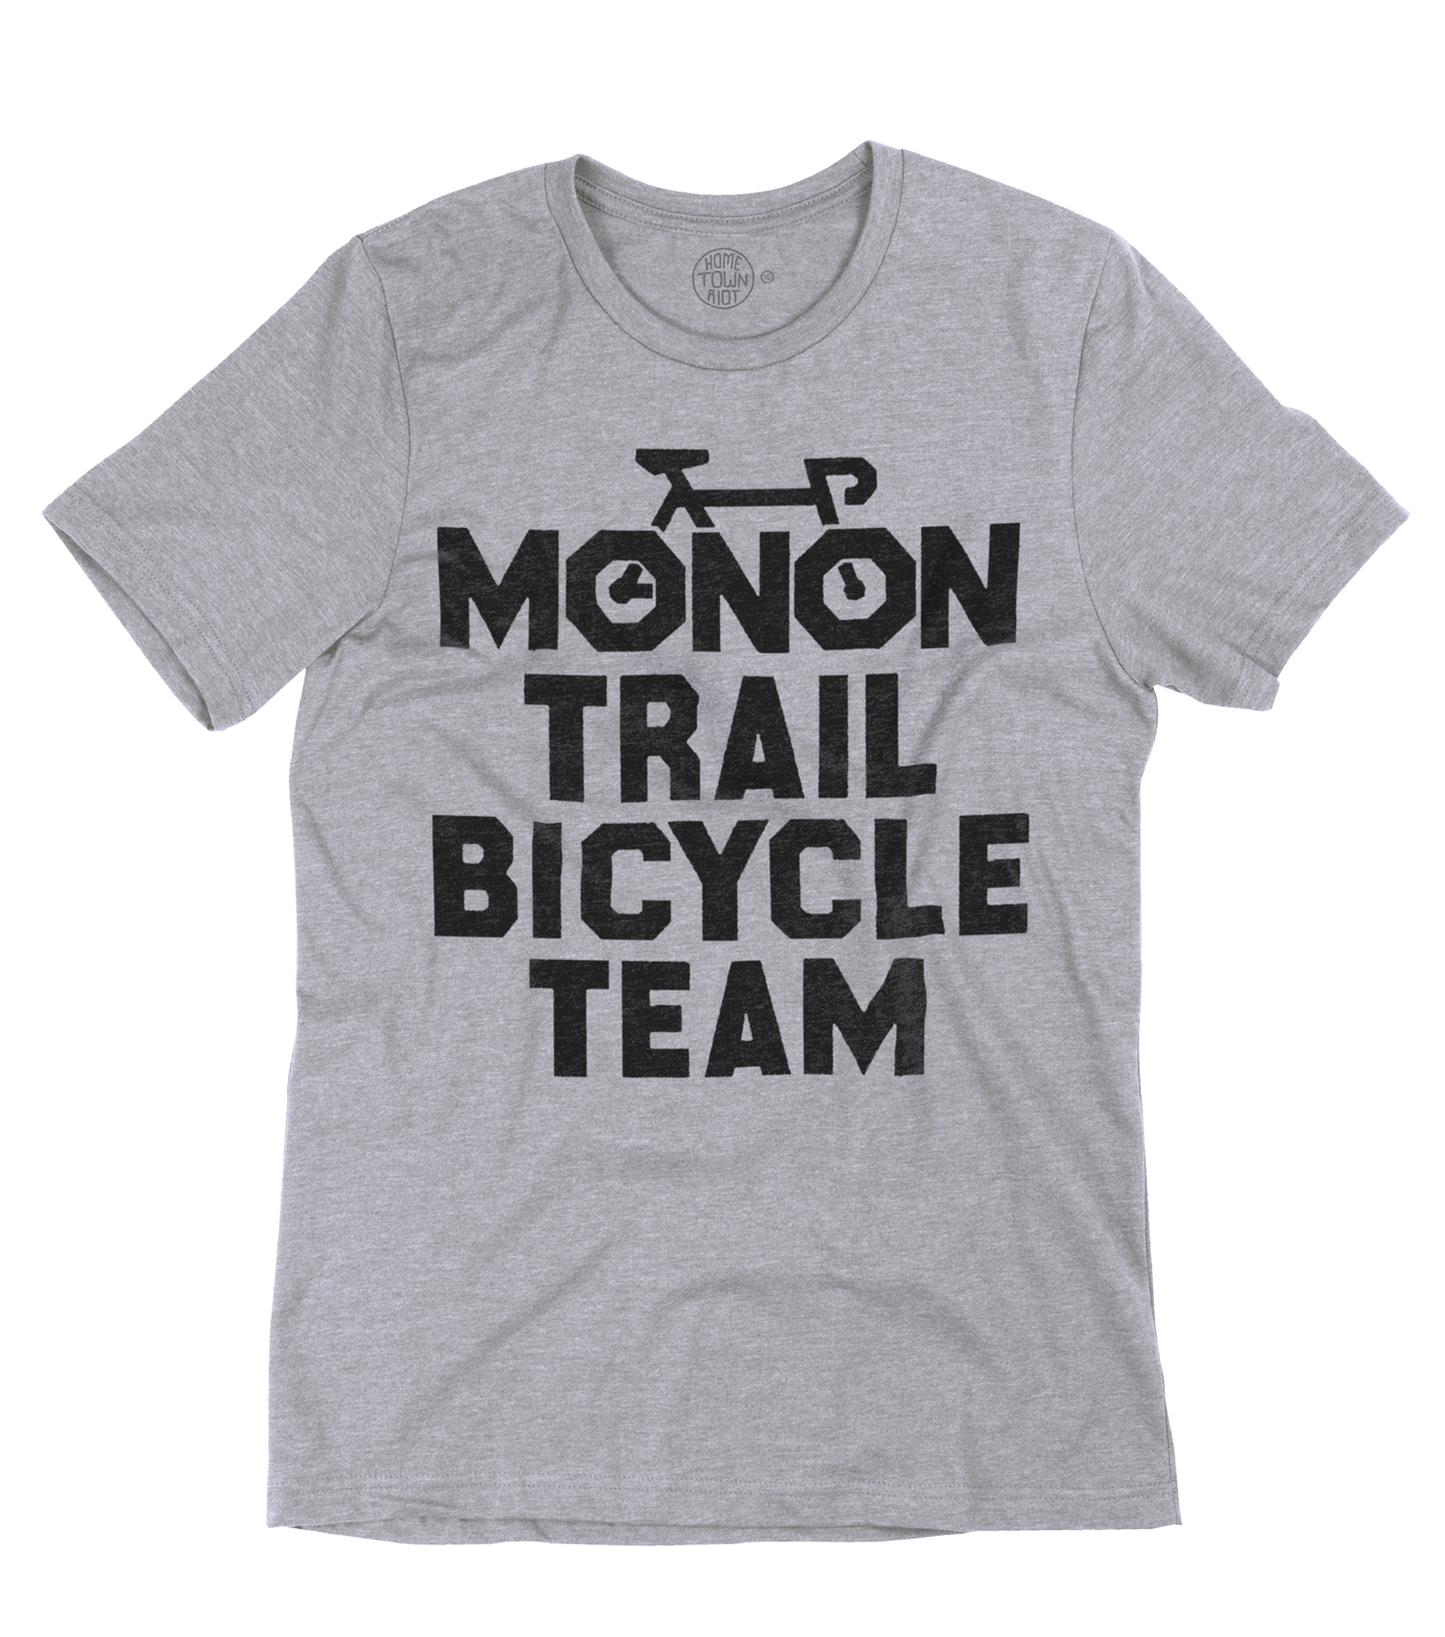 Monon Trail Bicycle Team Shirt - HomeTownRiot